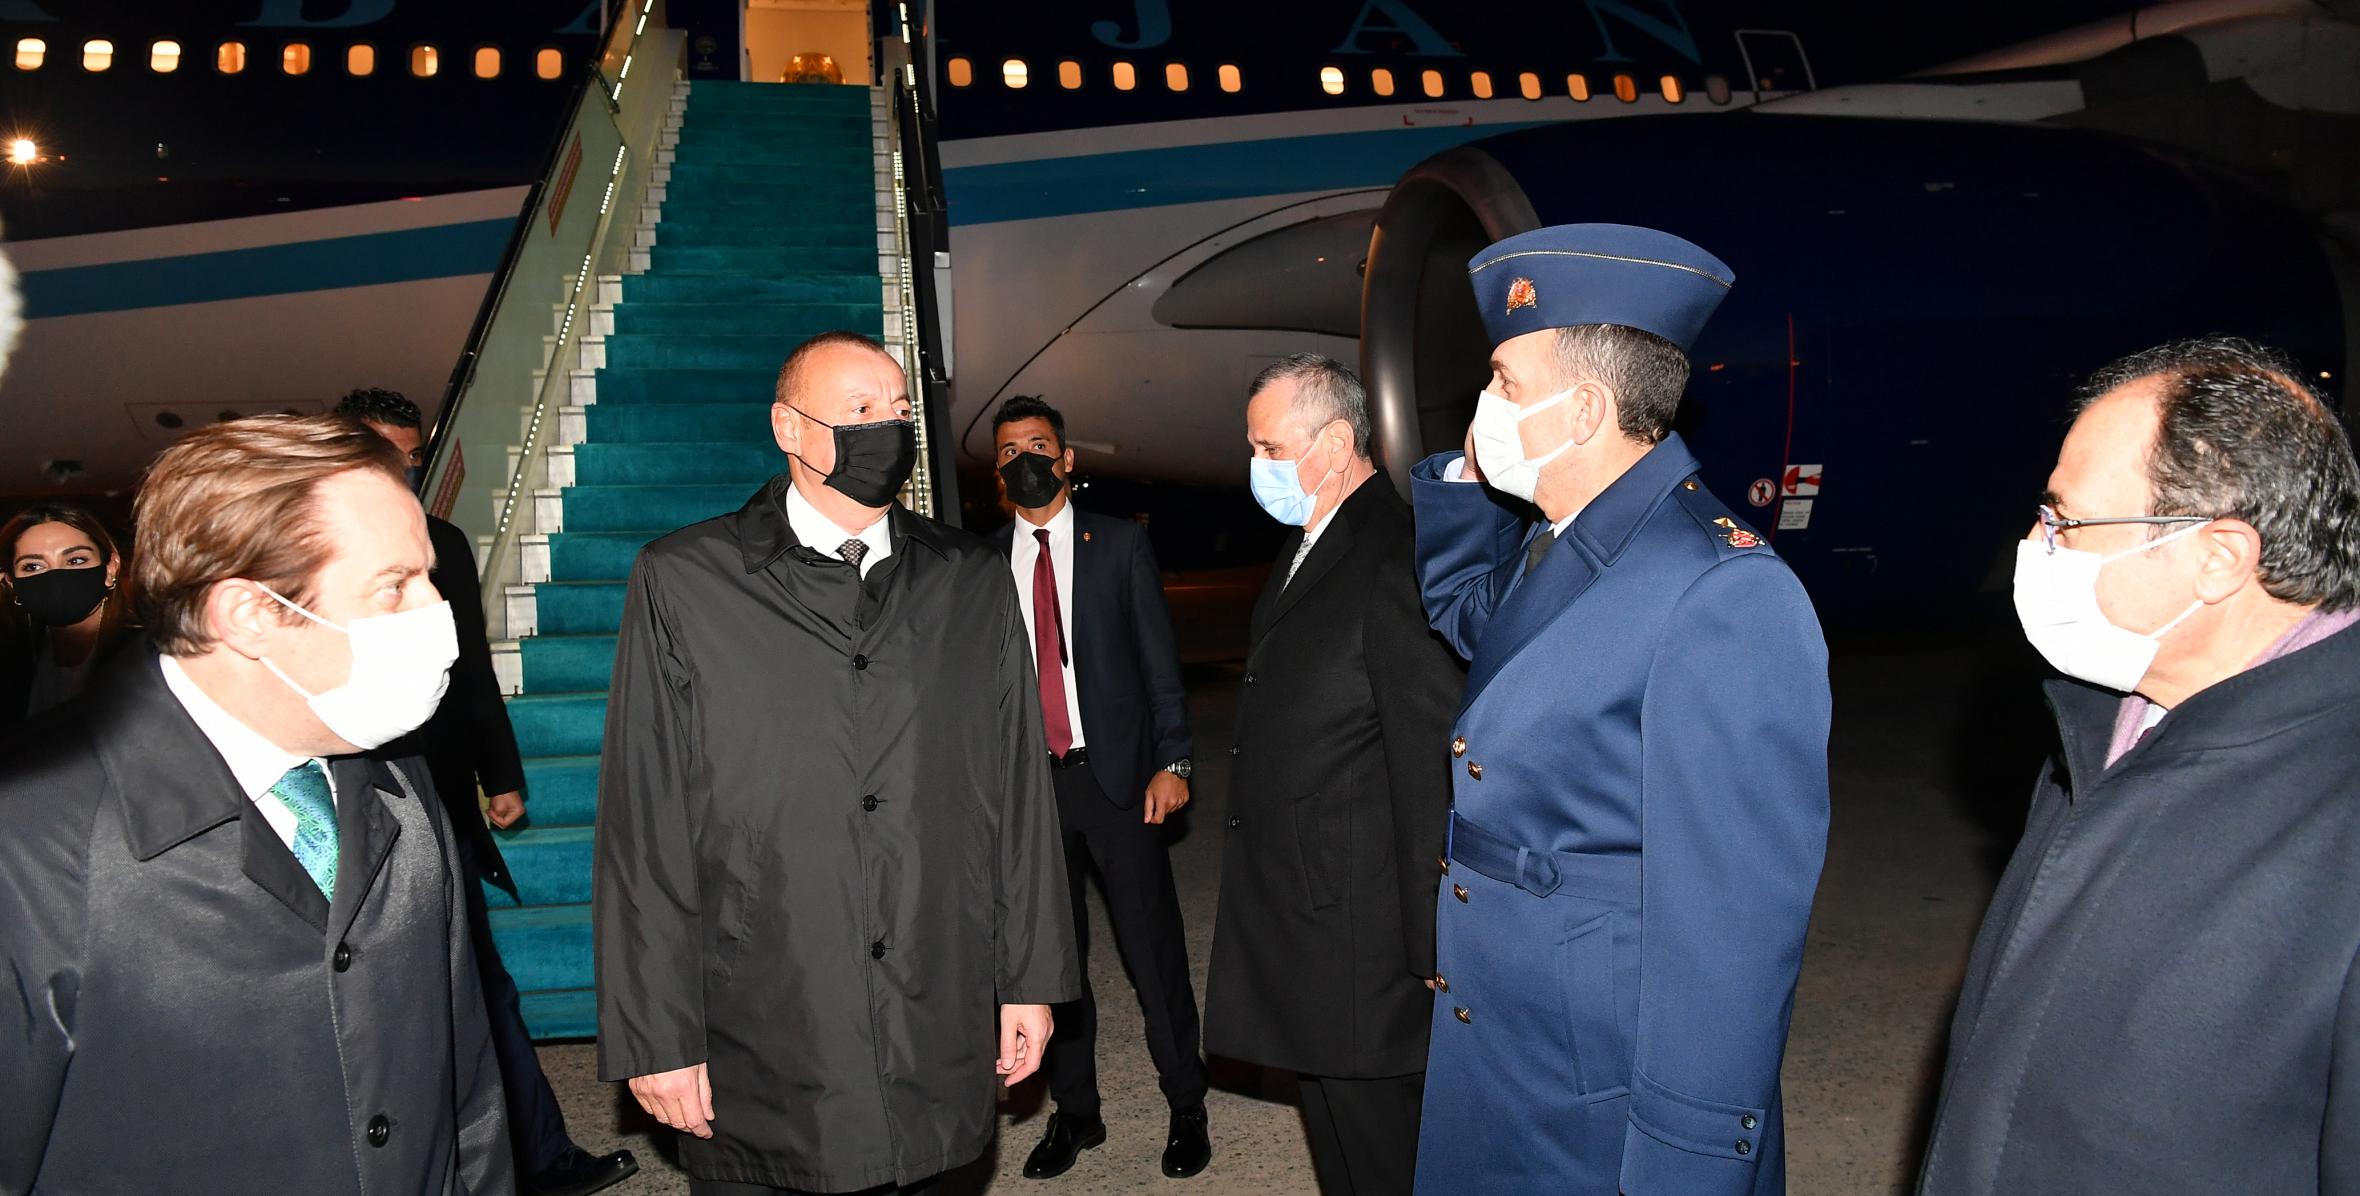 Ilham Aliyev arrived in Turkey